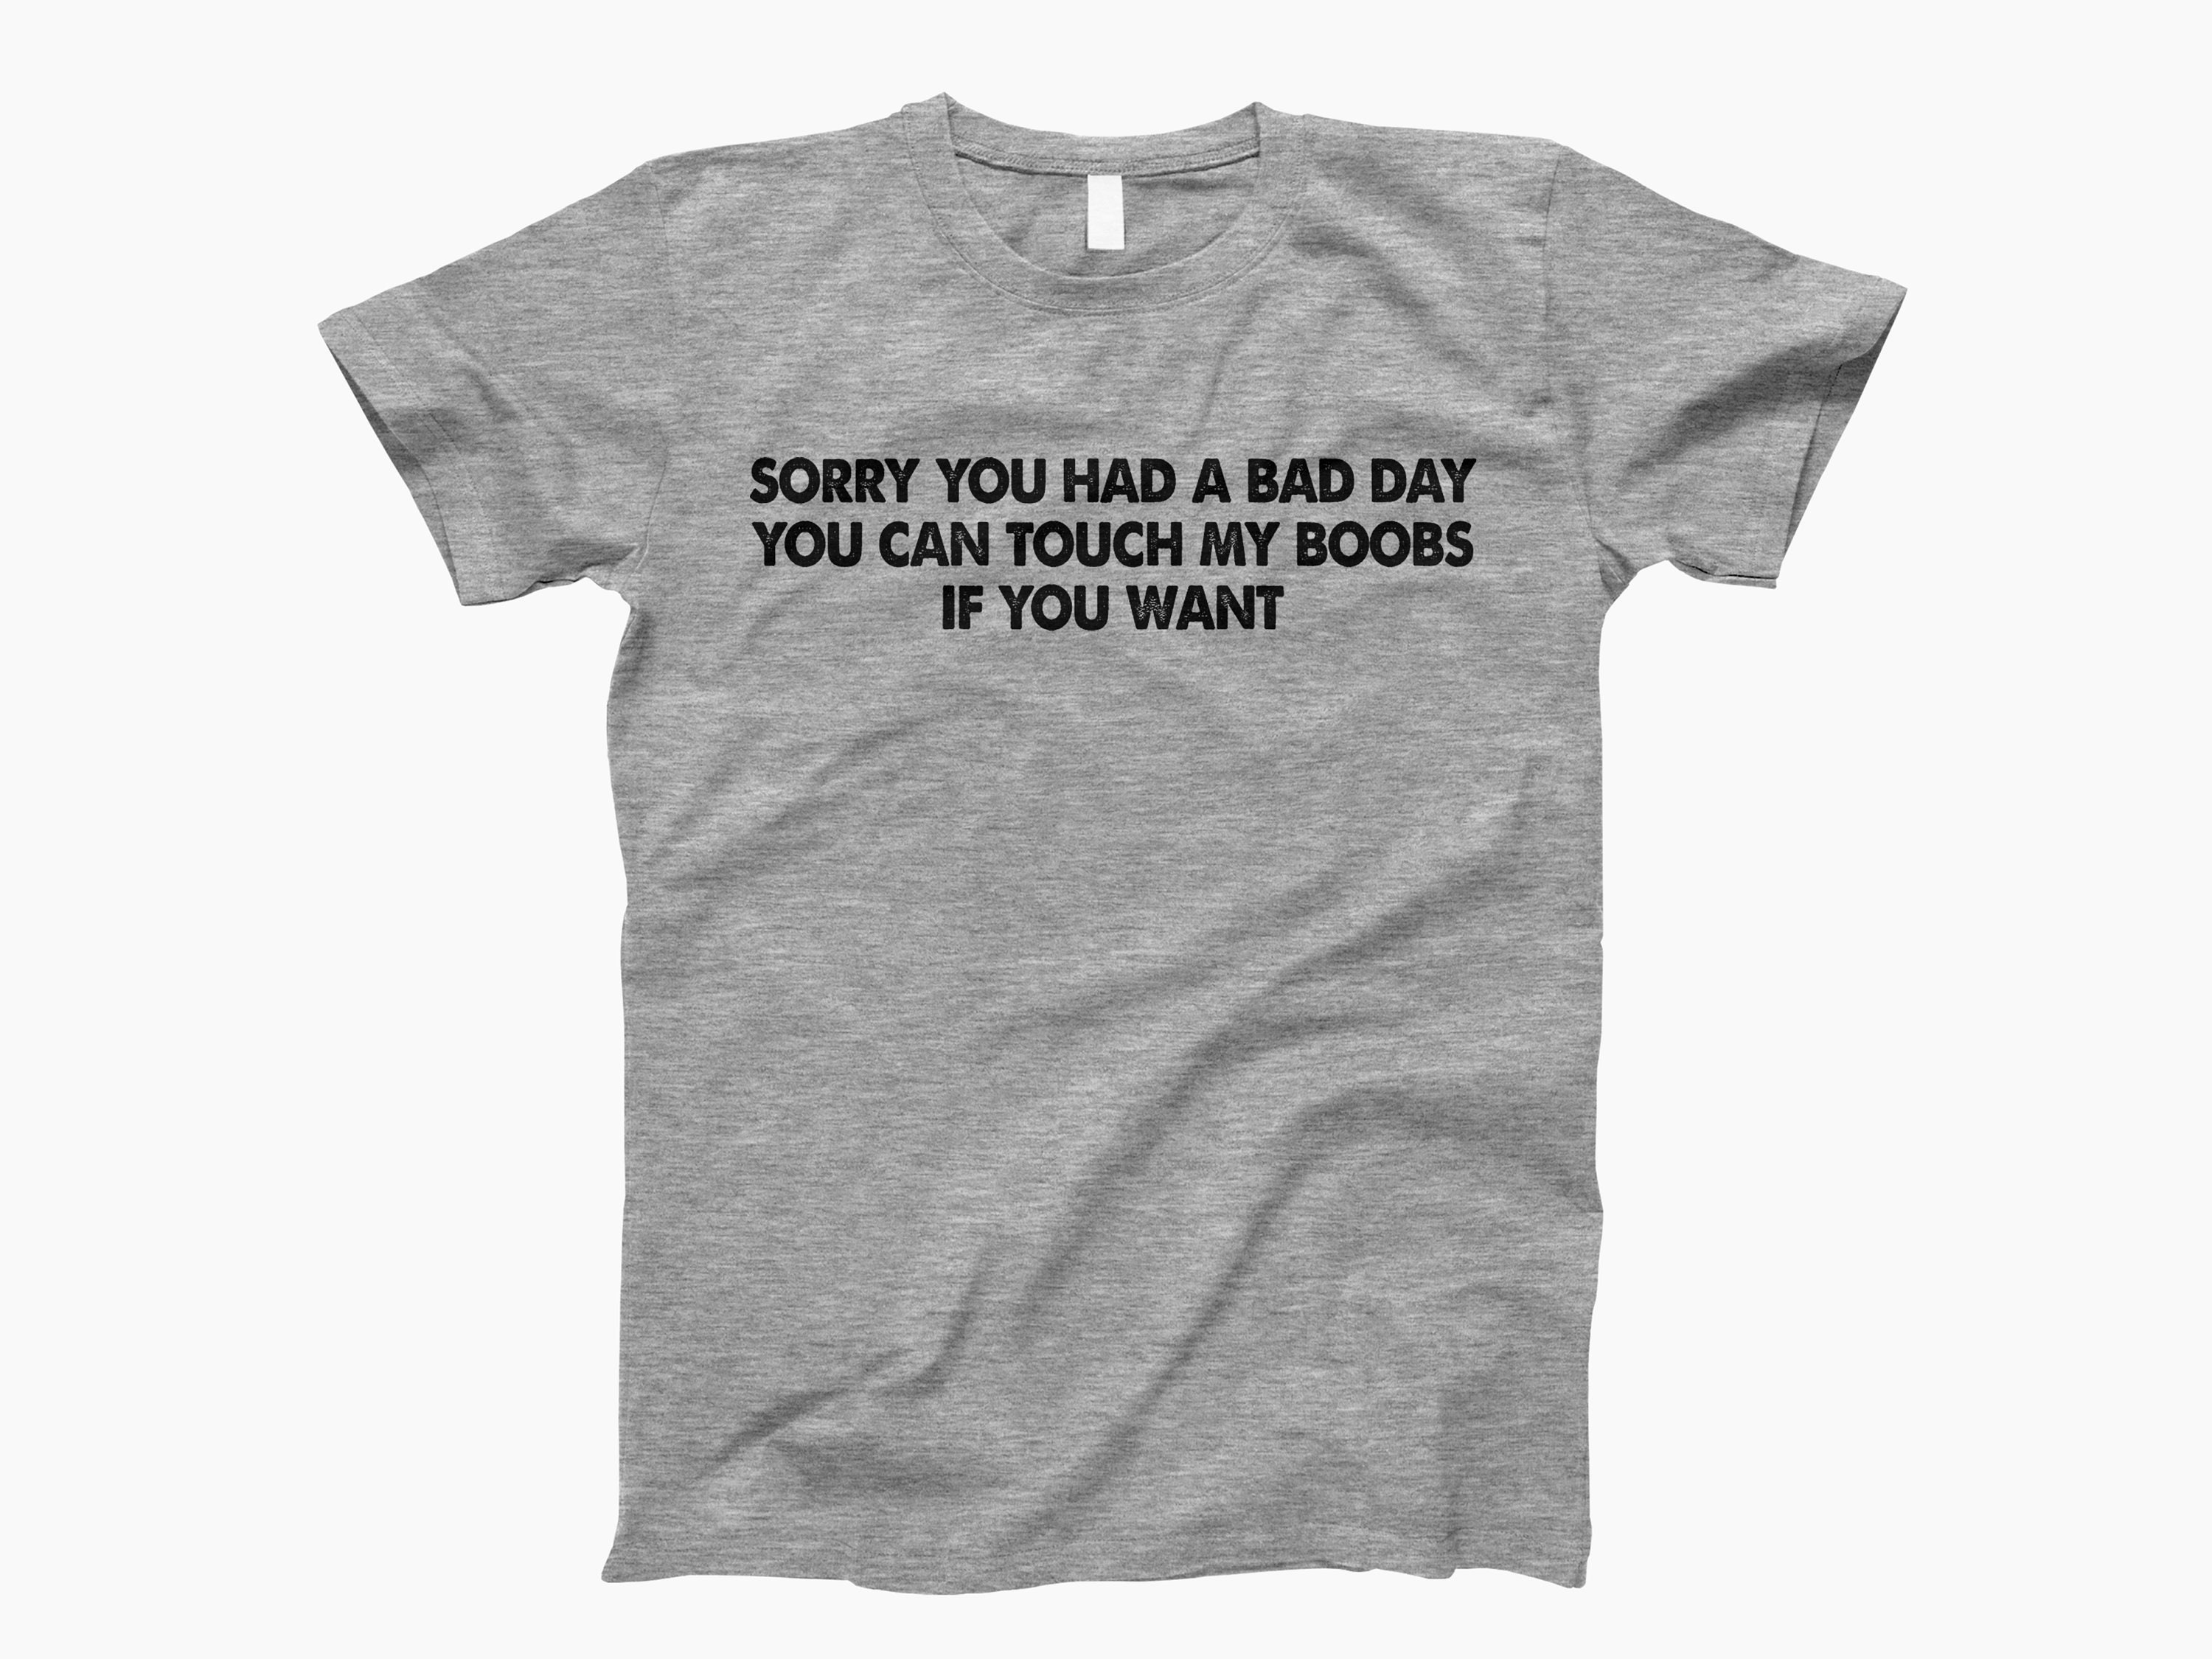 My Boobs Buddy - T-Shirt I Touch Myself